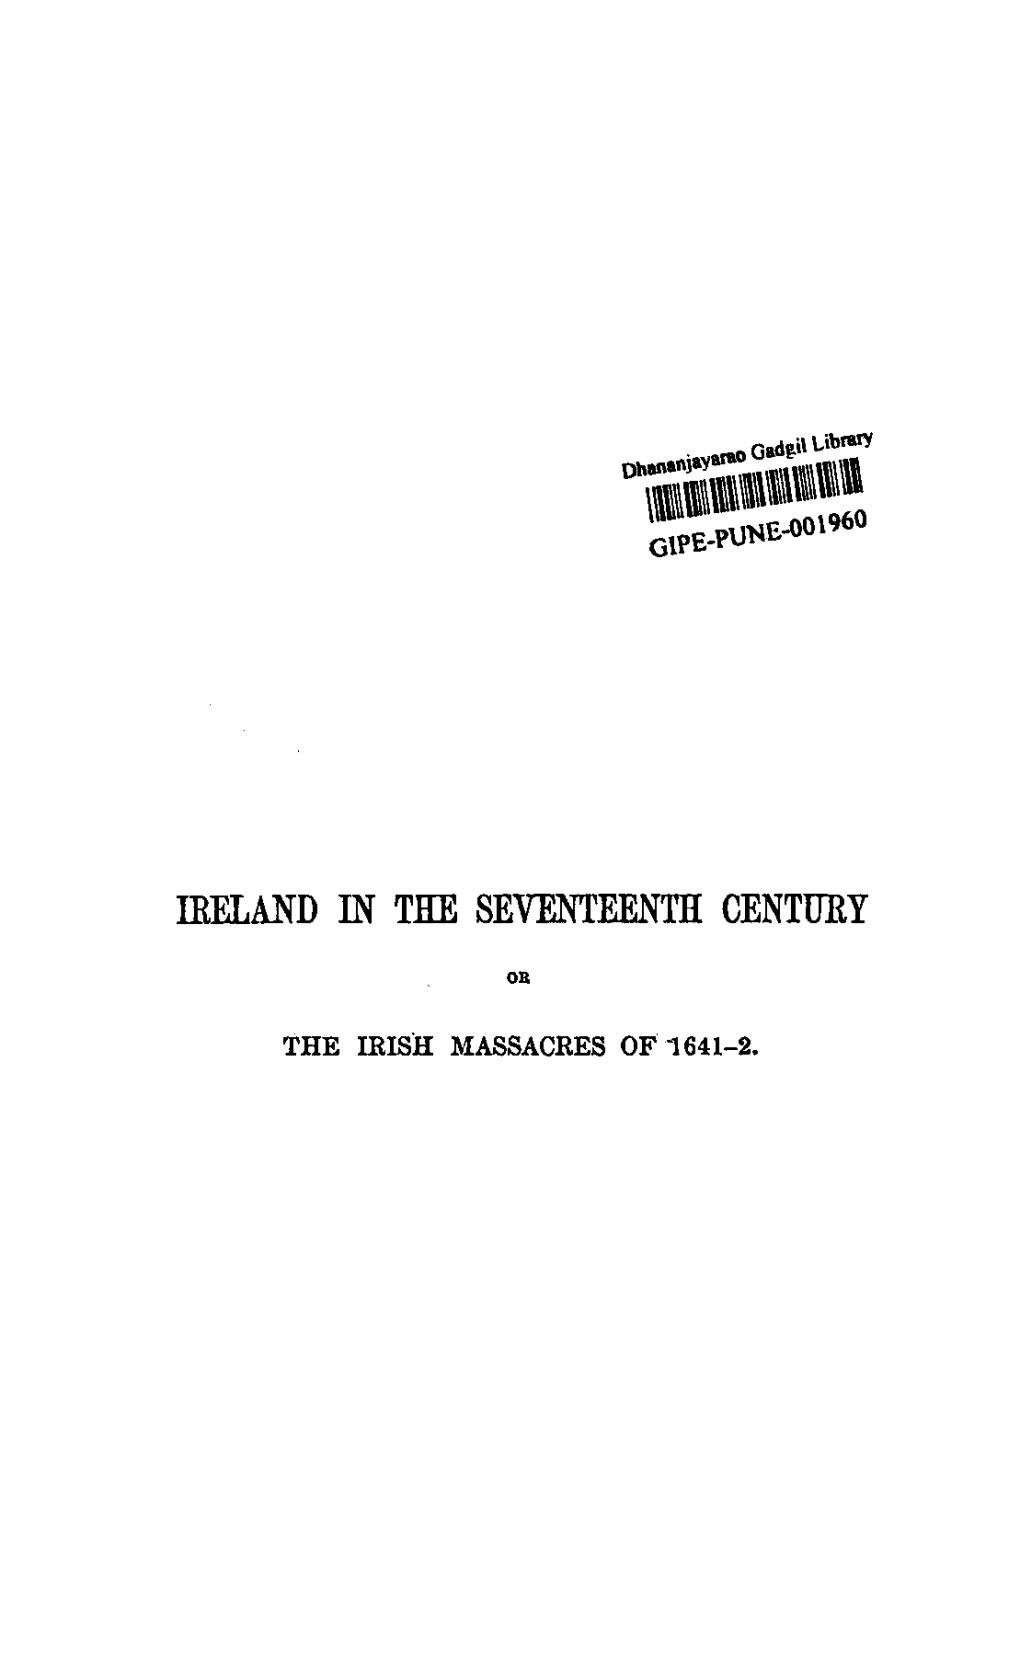 Ireland in the Seventeenth Century